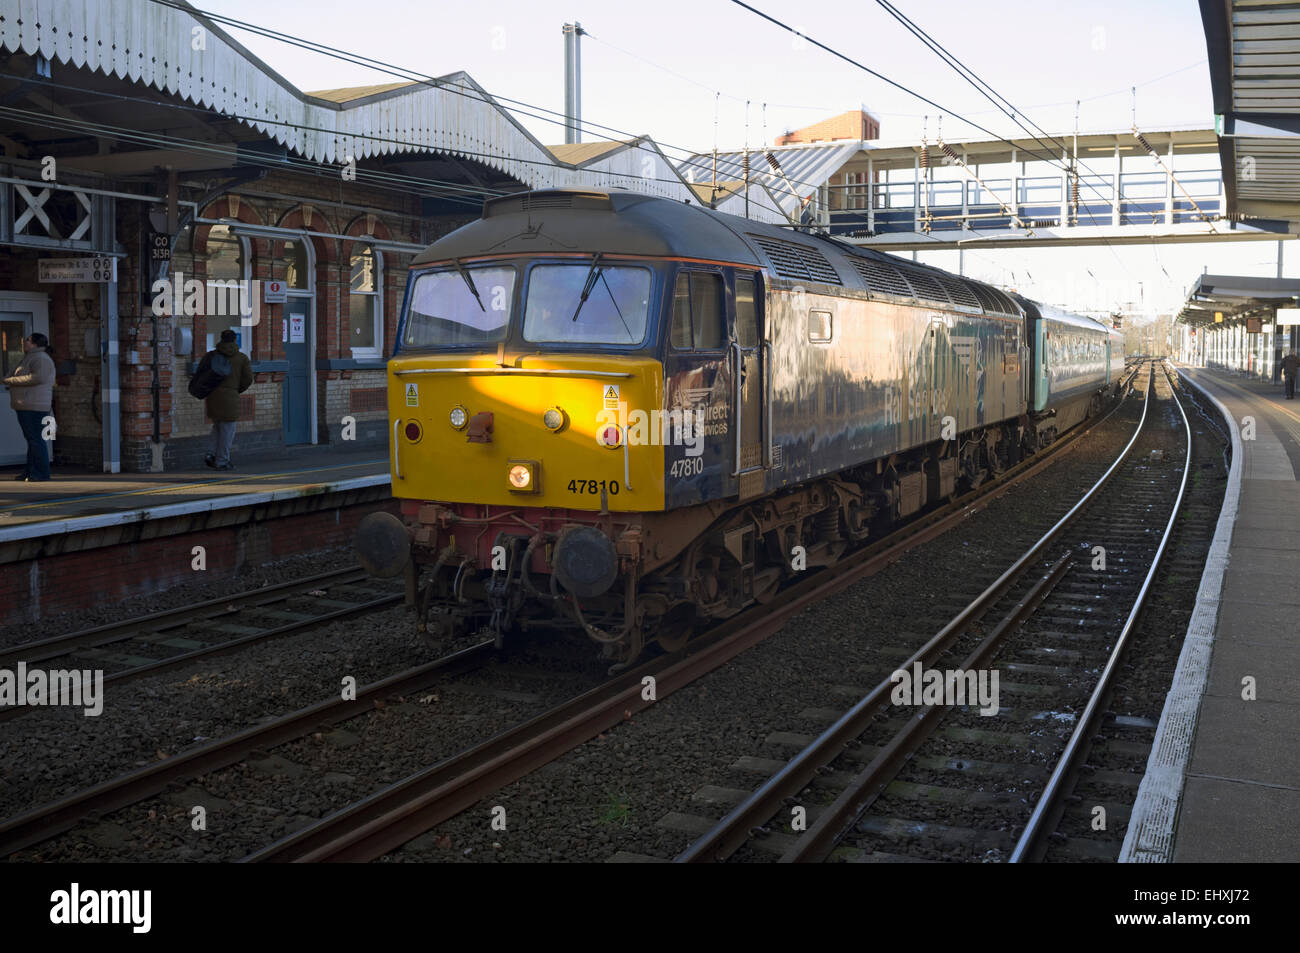 Direct Rail Services Class 47 diesel locomotive, Ipswich, Suffolk, UK. Stock Photo